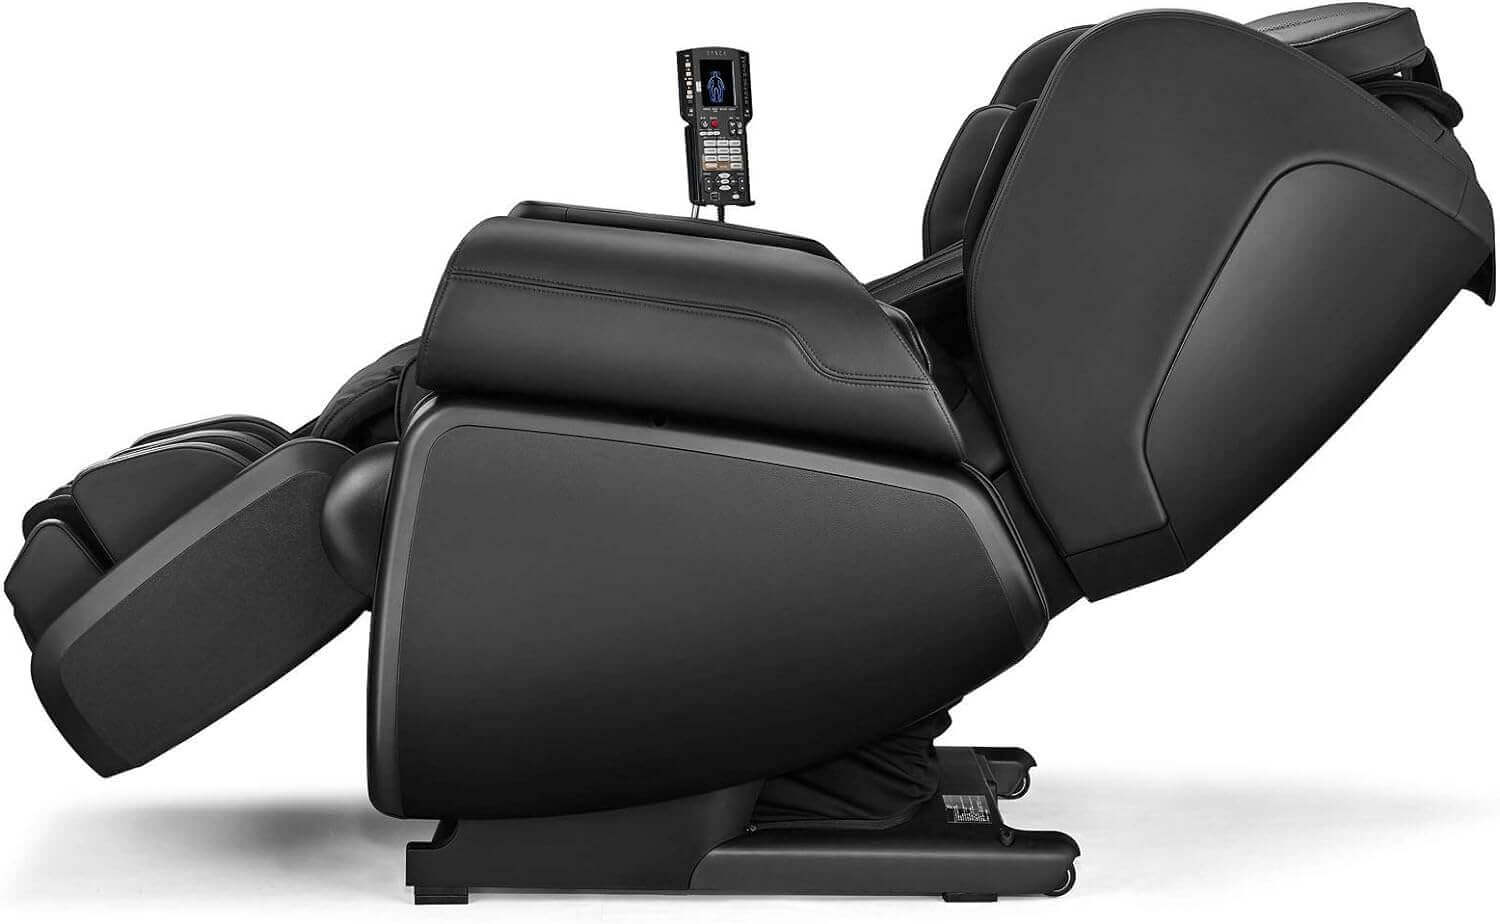 Synca Wellness Kagra - Premium 4D Heated Zero Gravity Massage Chair - Electric Massaging Chairs